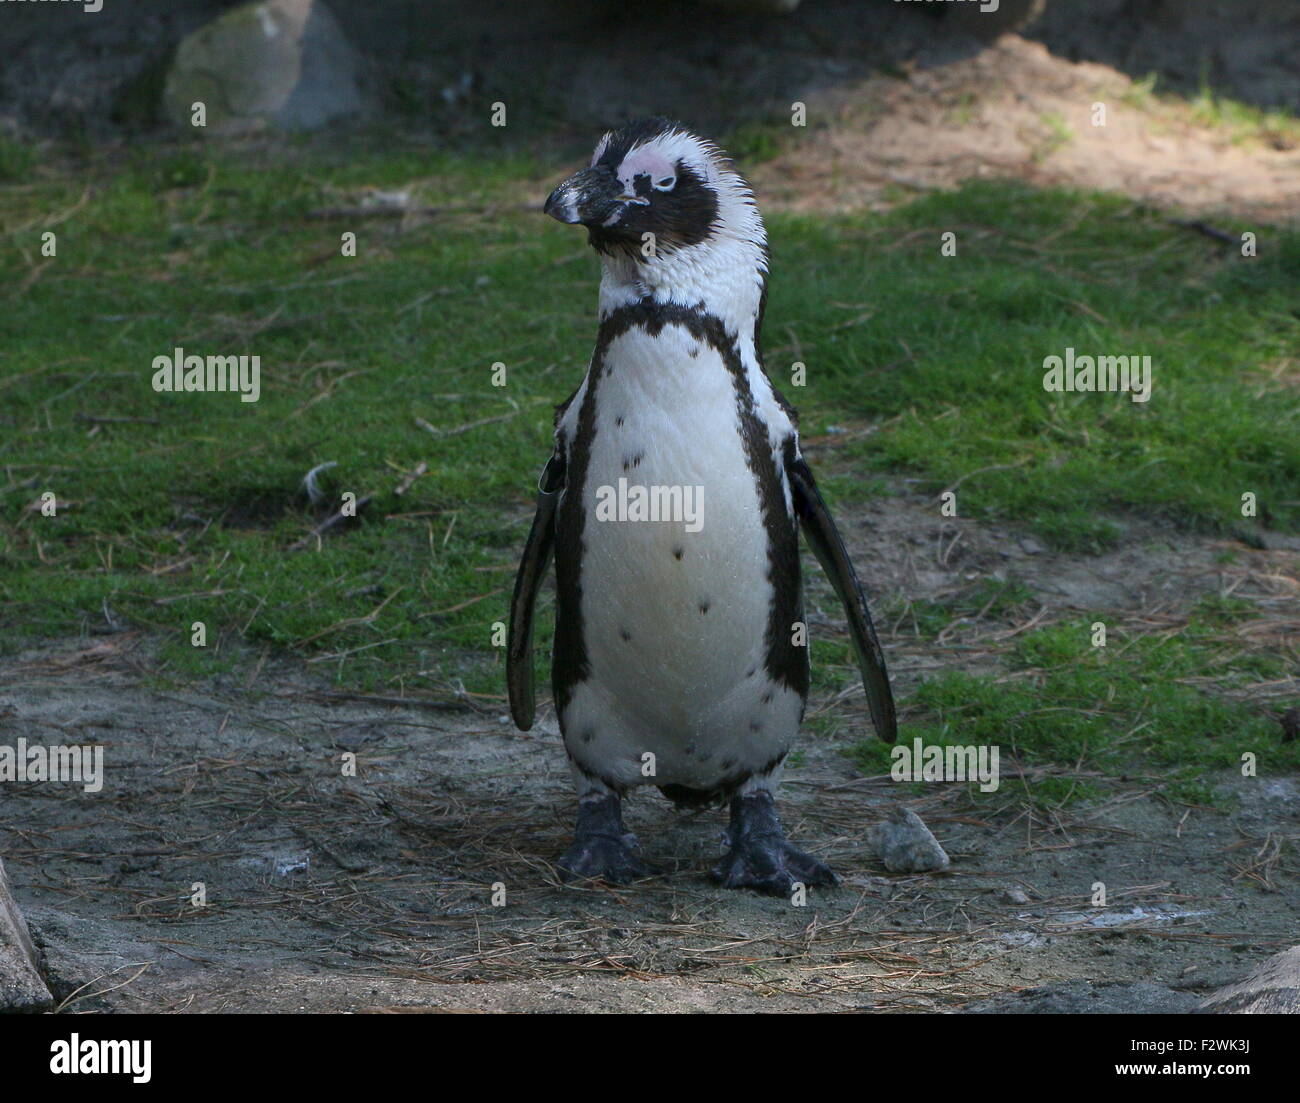 Juvenile Black footed penguin (Spheniscus demersus,), a.k.a. African penguin or Jackass penguin Stock Photo